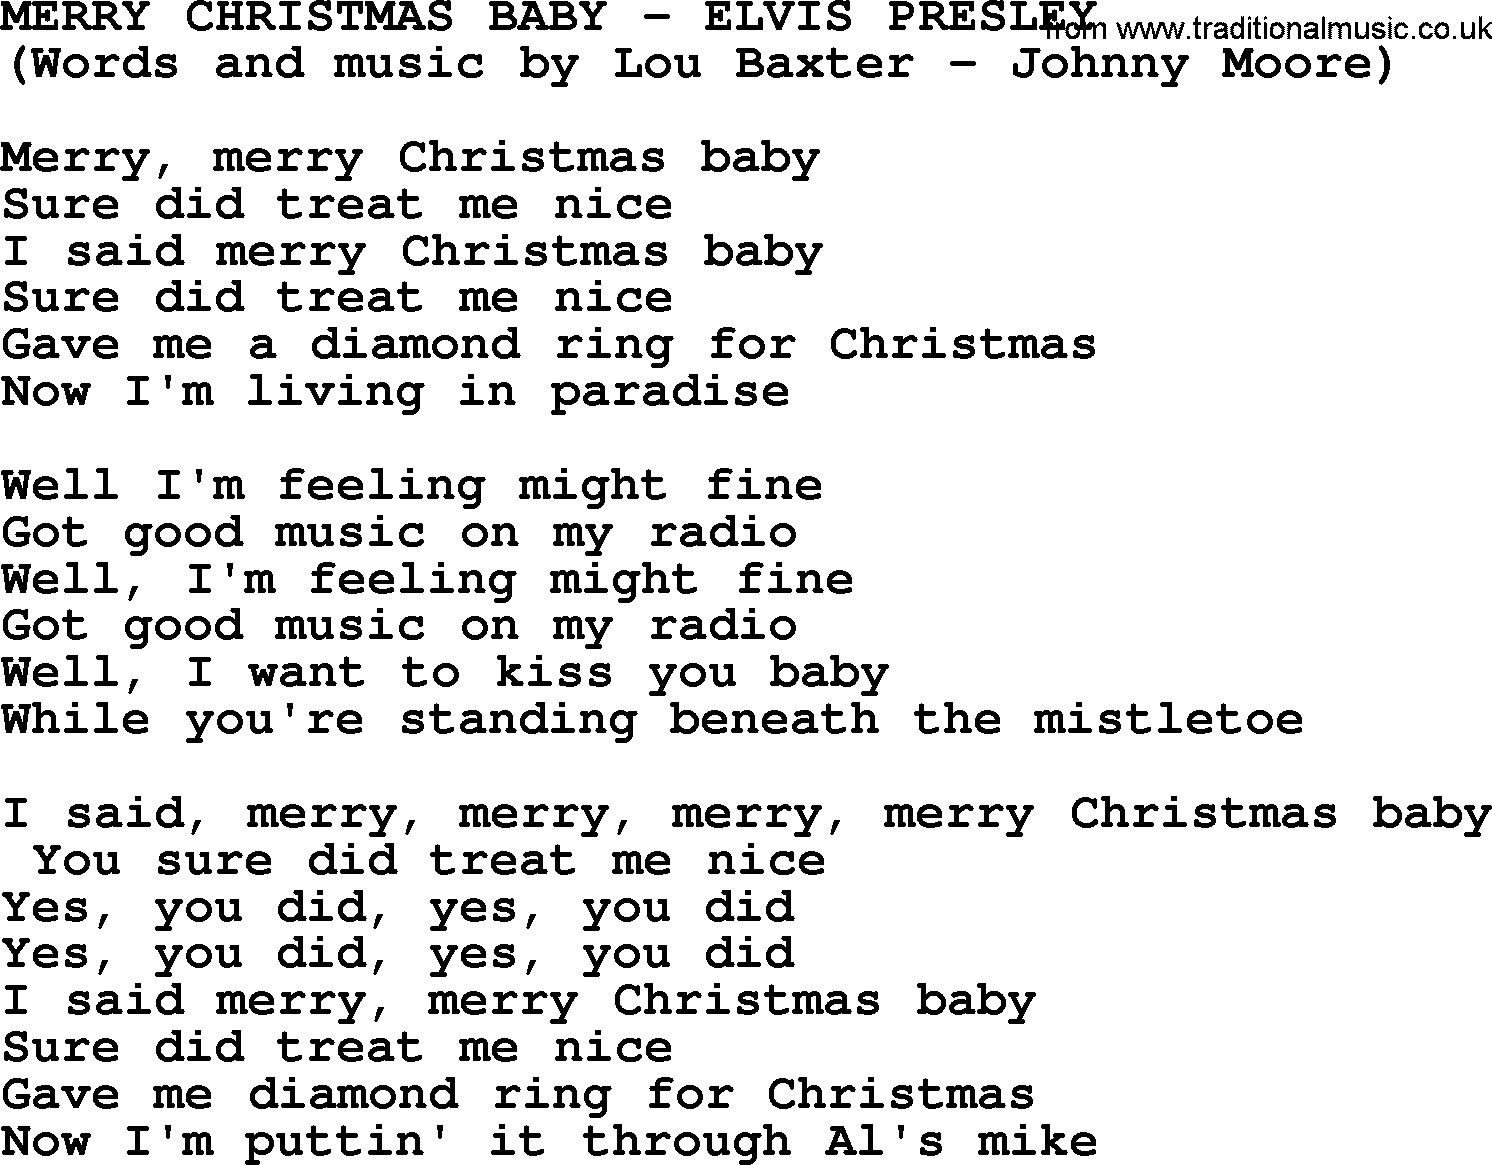 Elvis Presley song: Merry Christmas Baby lyrics